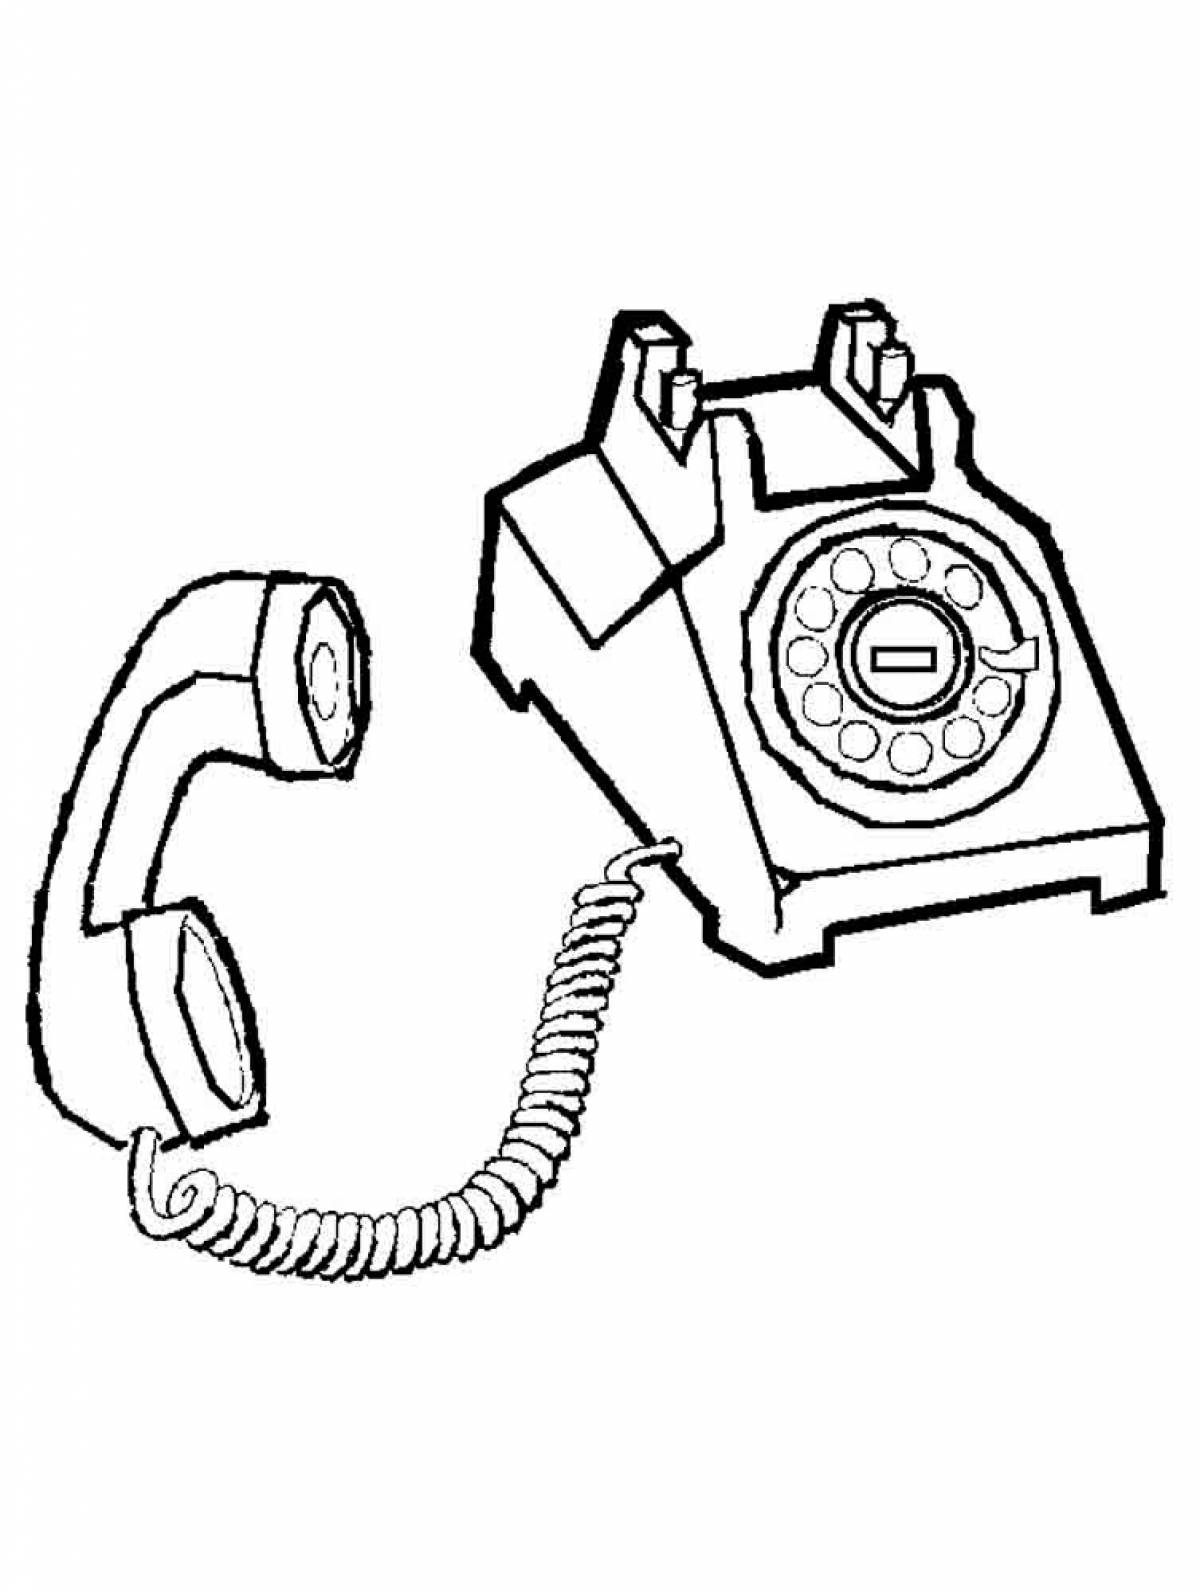 Landline phone